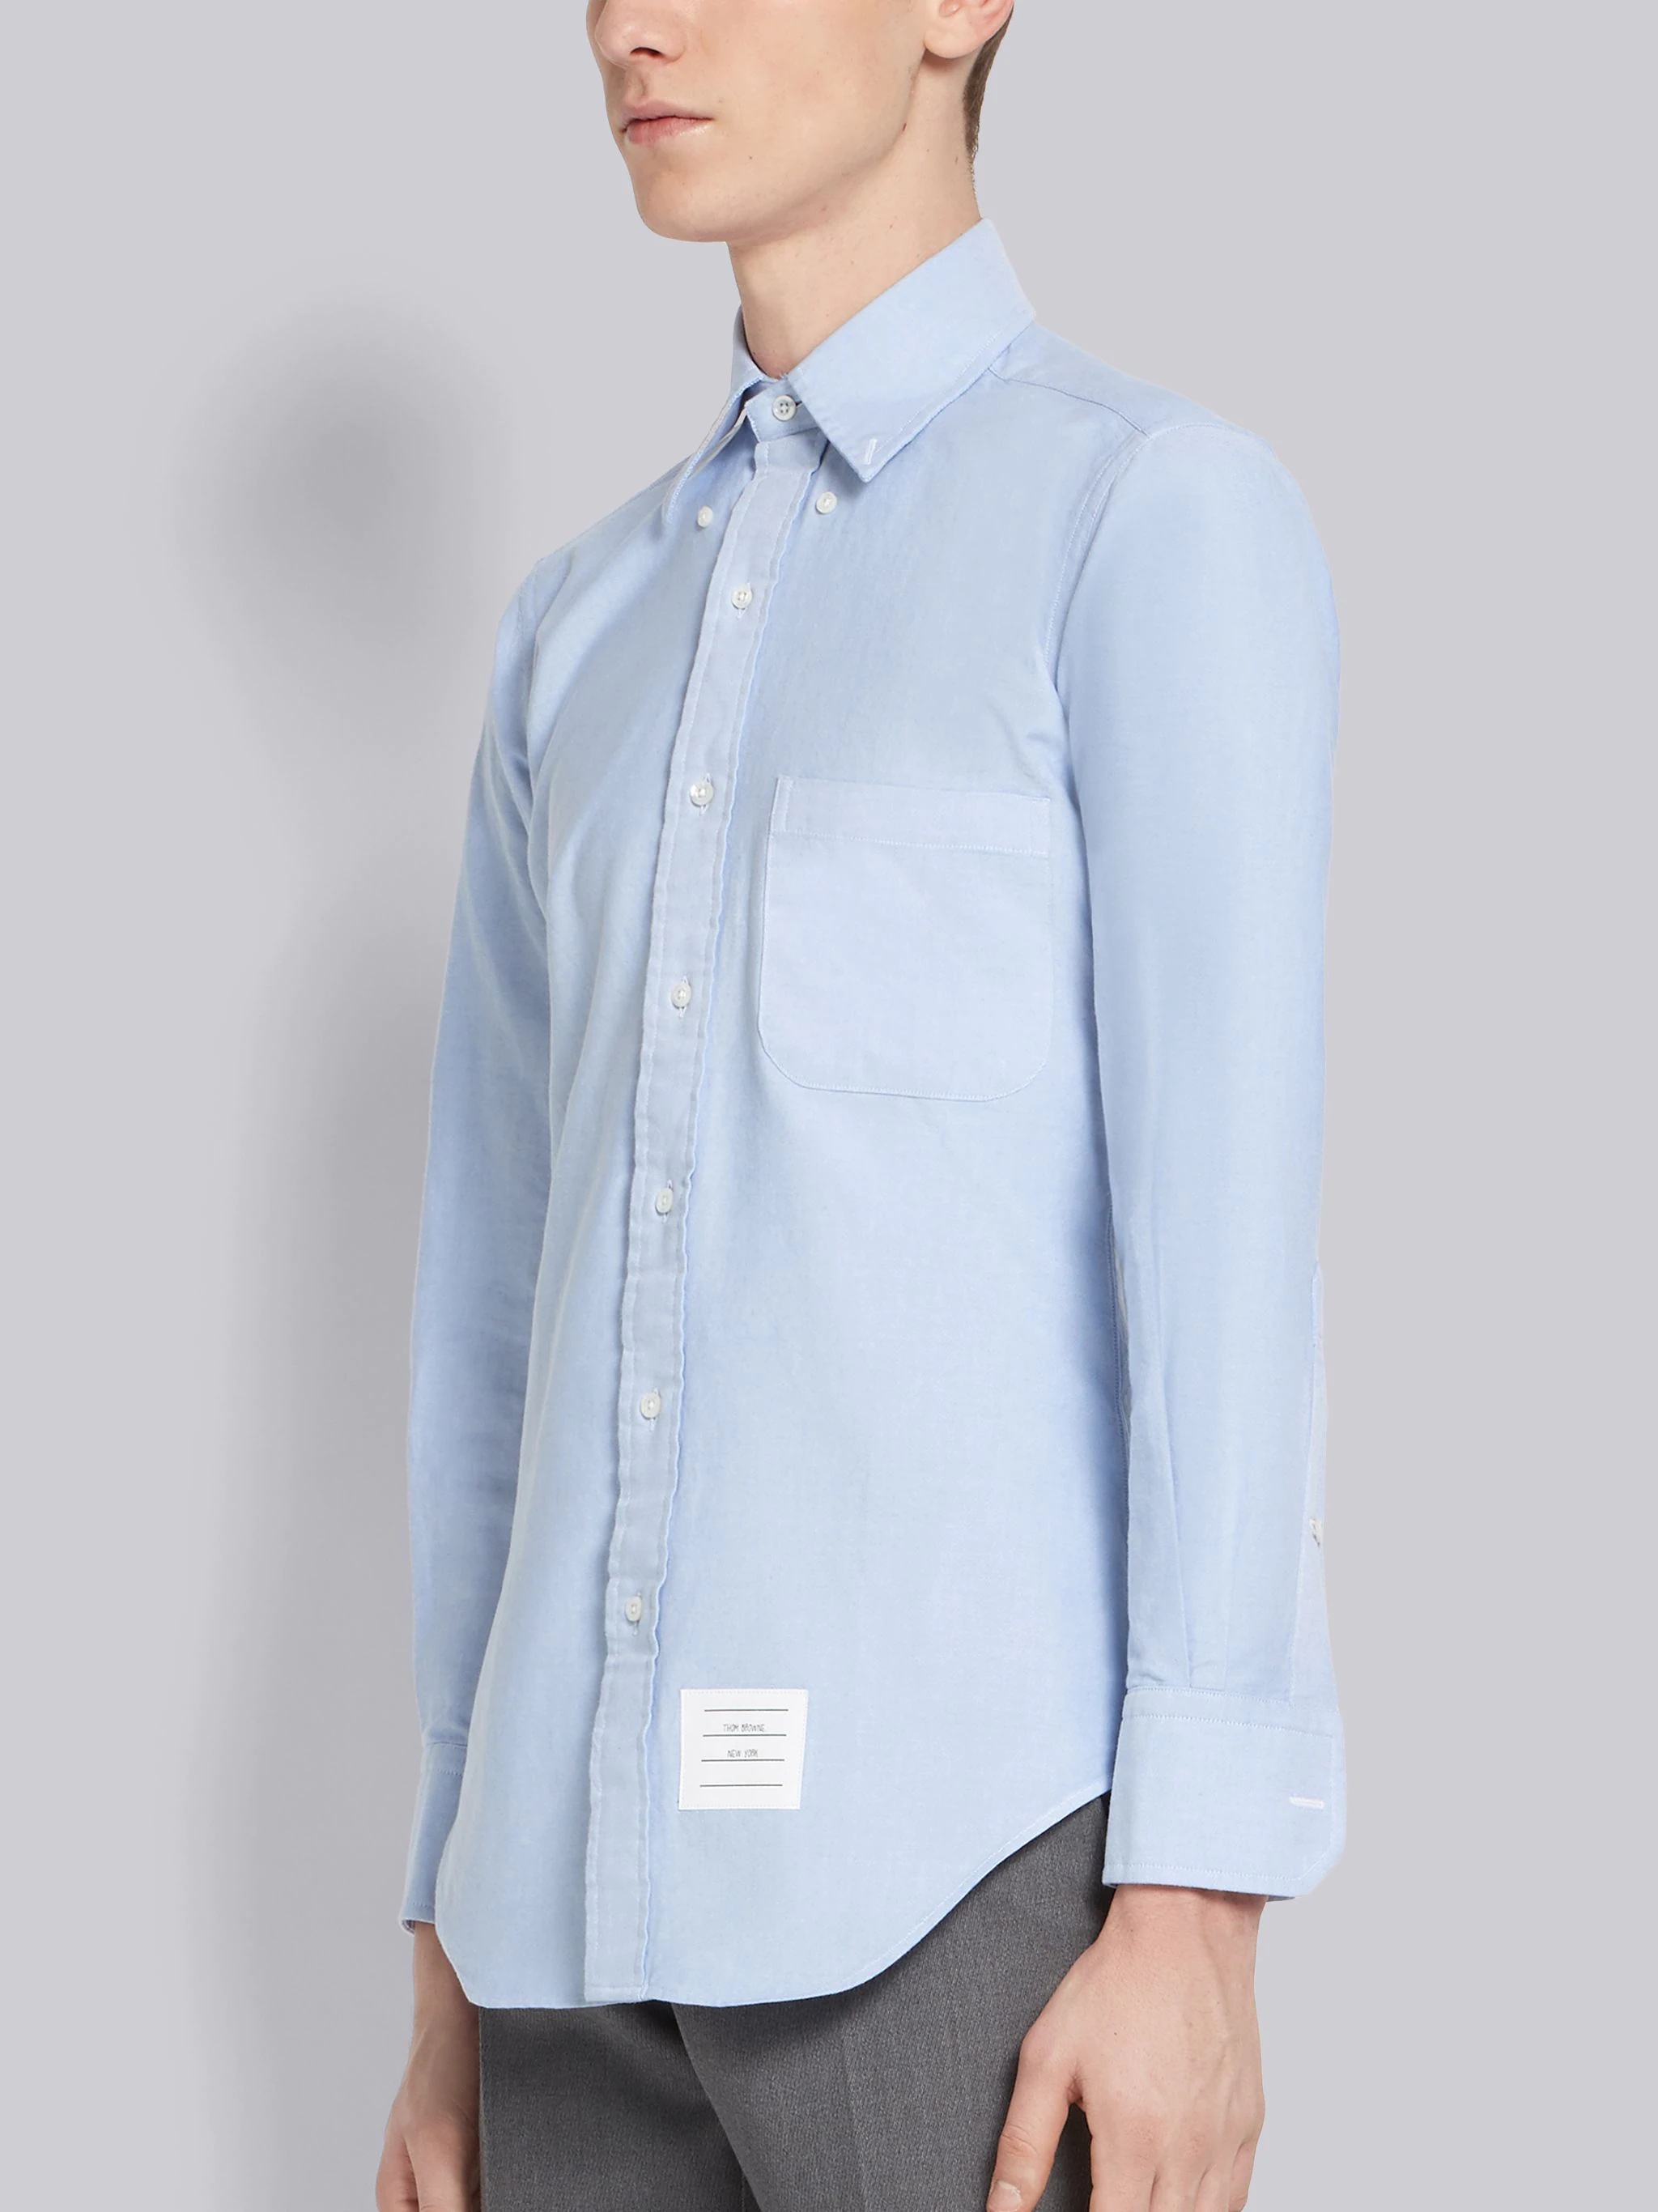 Light Blue Oxford Slim Fit Shirt - 2